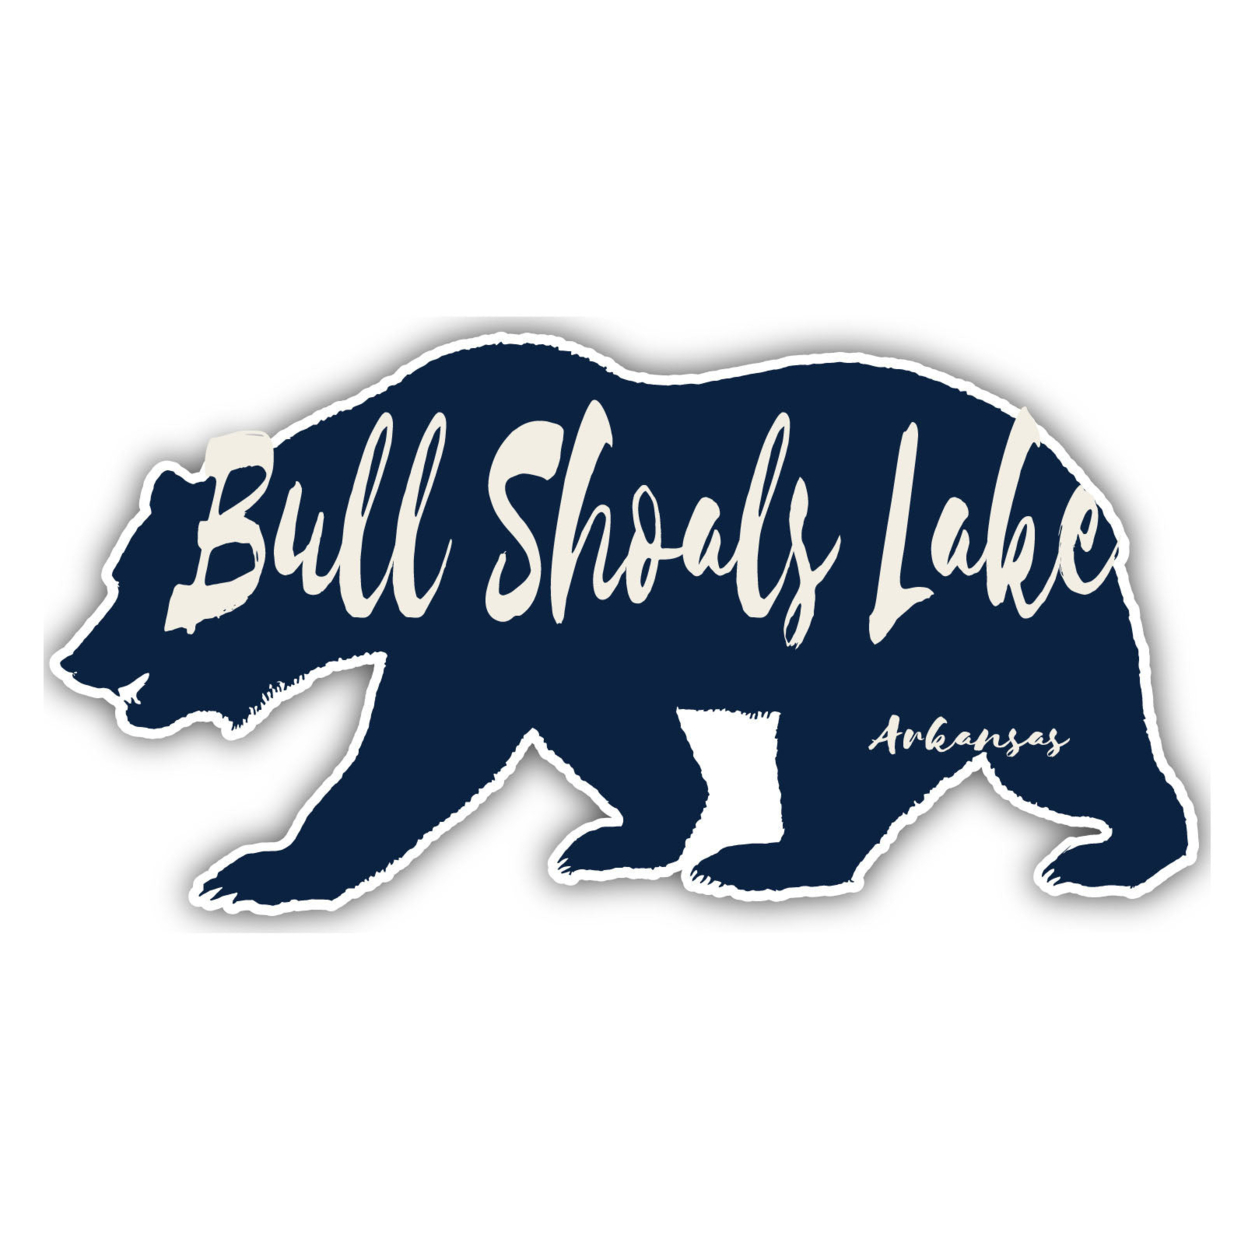 Bull Shoals Lake Arkansas Souvenir Decorative Stickers (Choose Theme And Size) - Single Unit, 4-Inch, Adventures Awaits